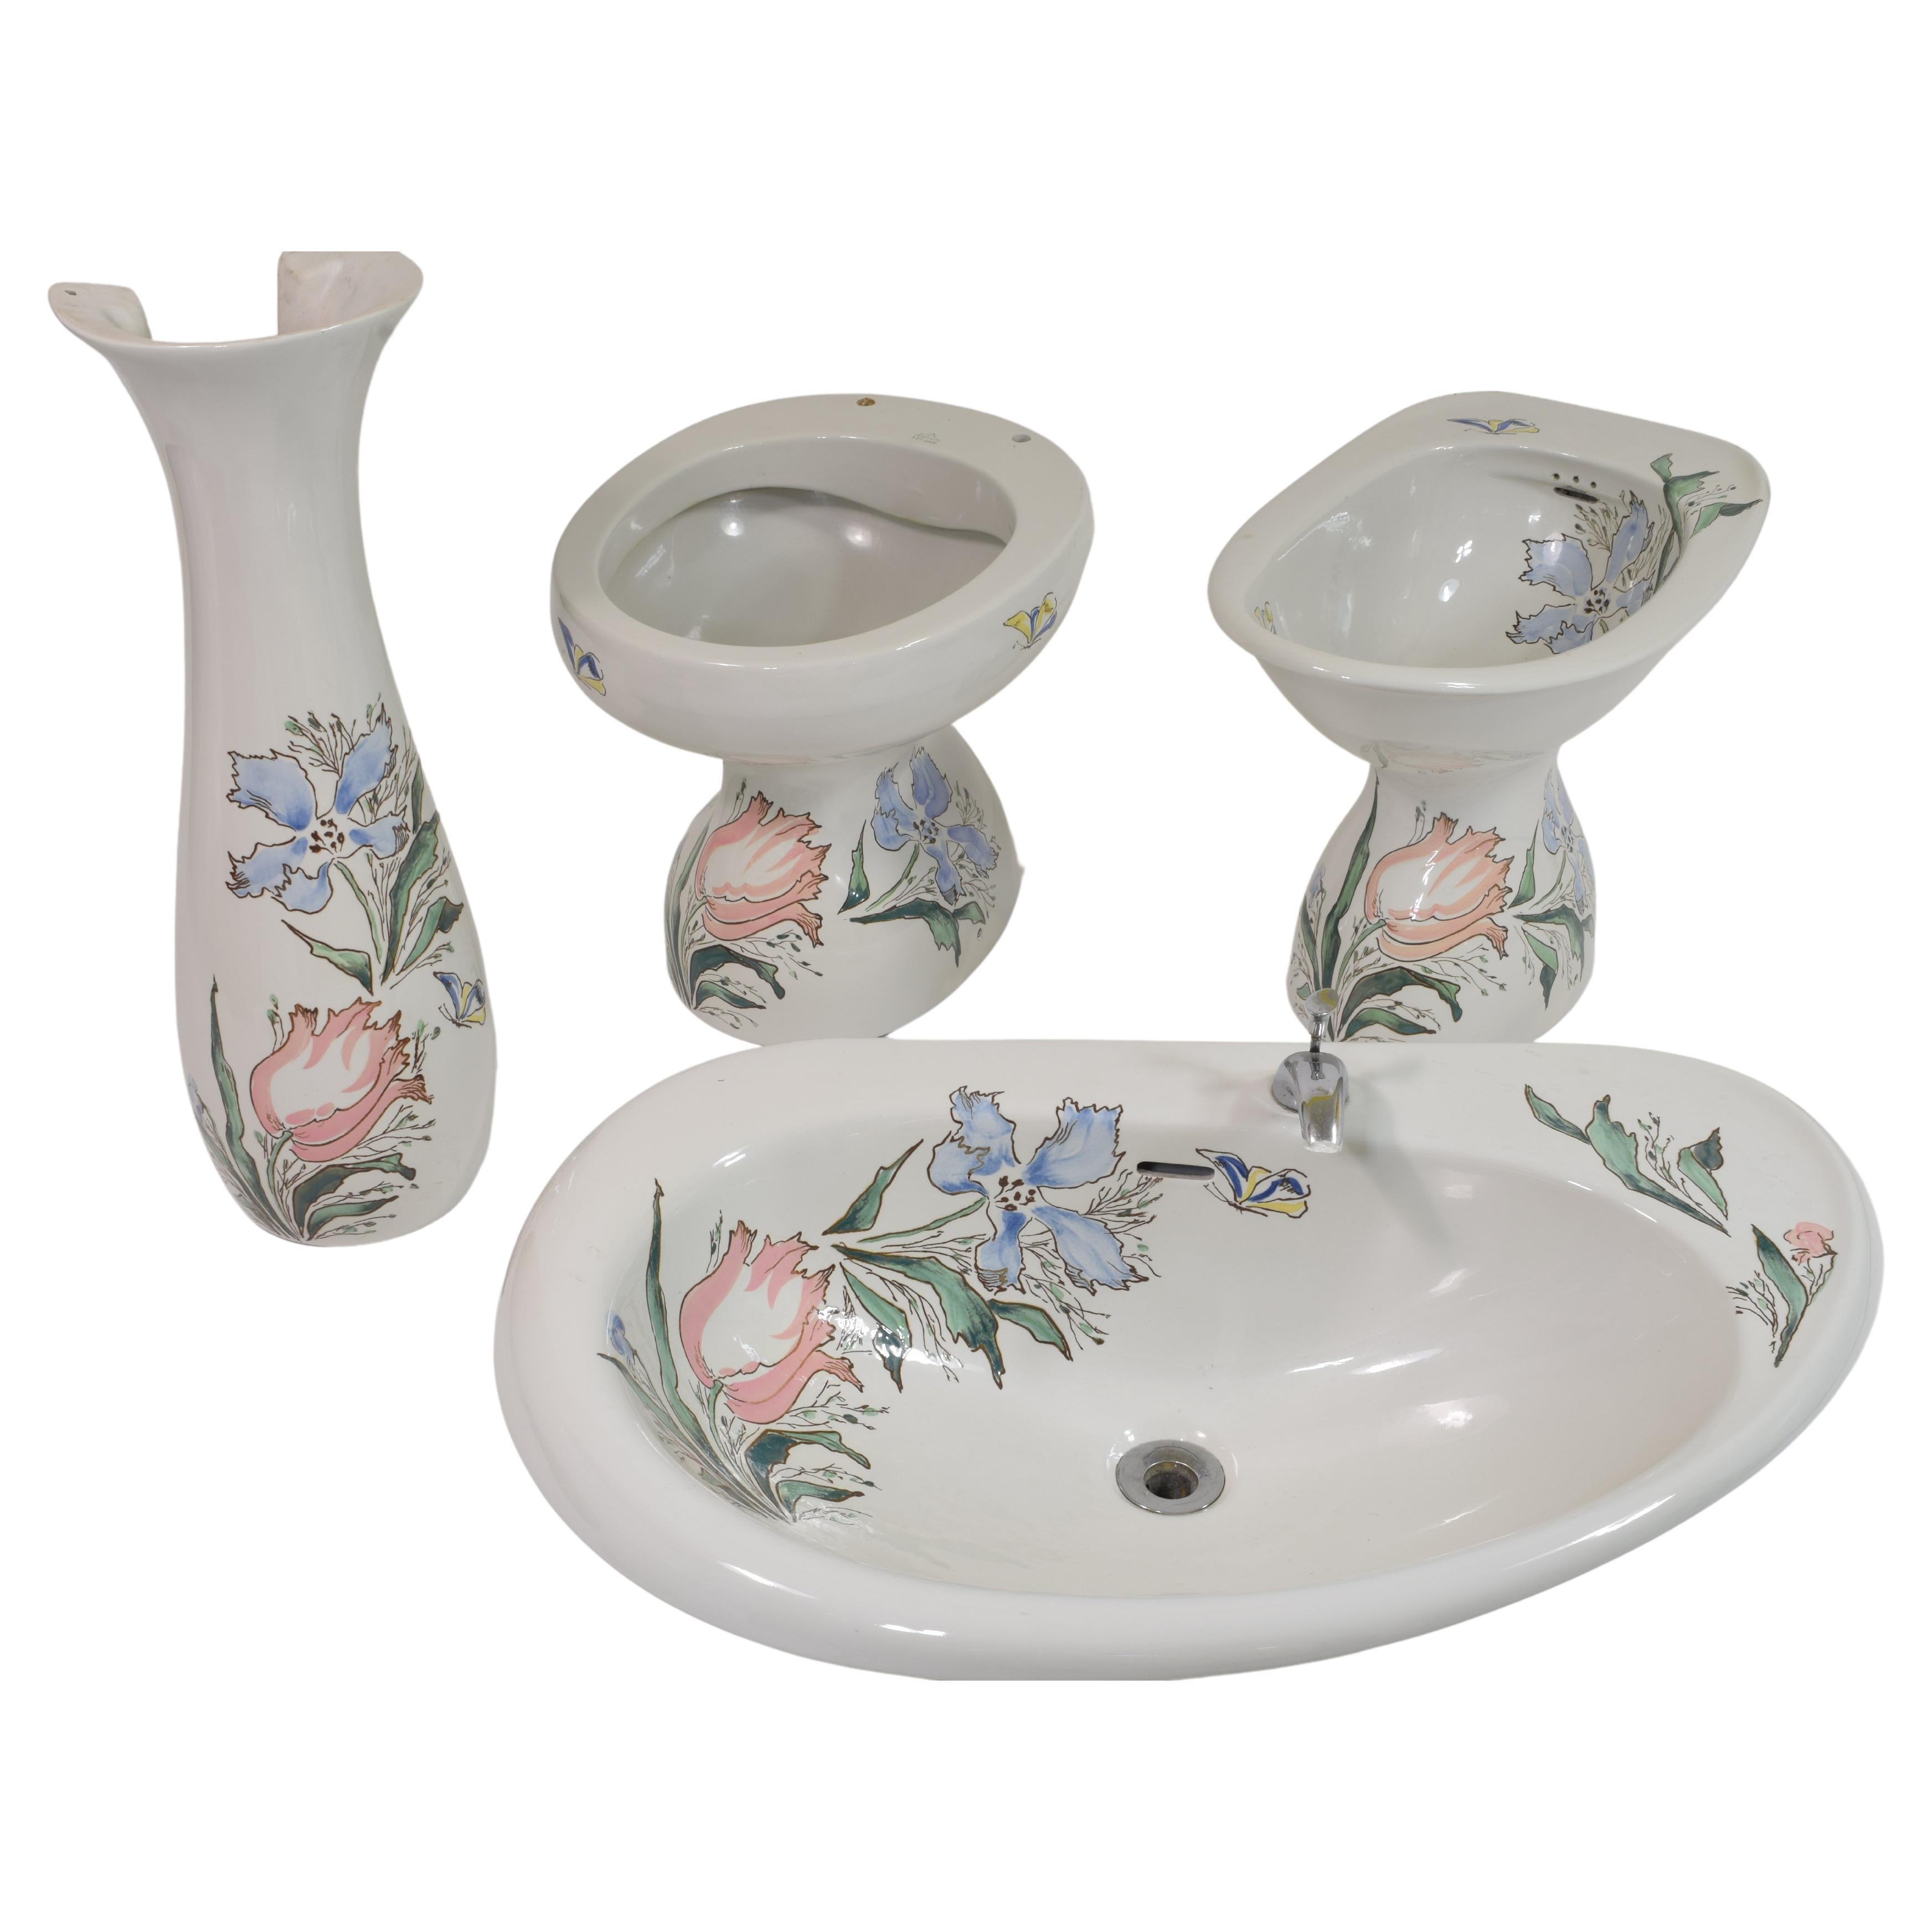 Set Ceramic Sanitary Ware, Design Antonia Campi Prod, Lavenite Ginori, Italy